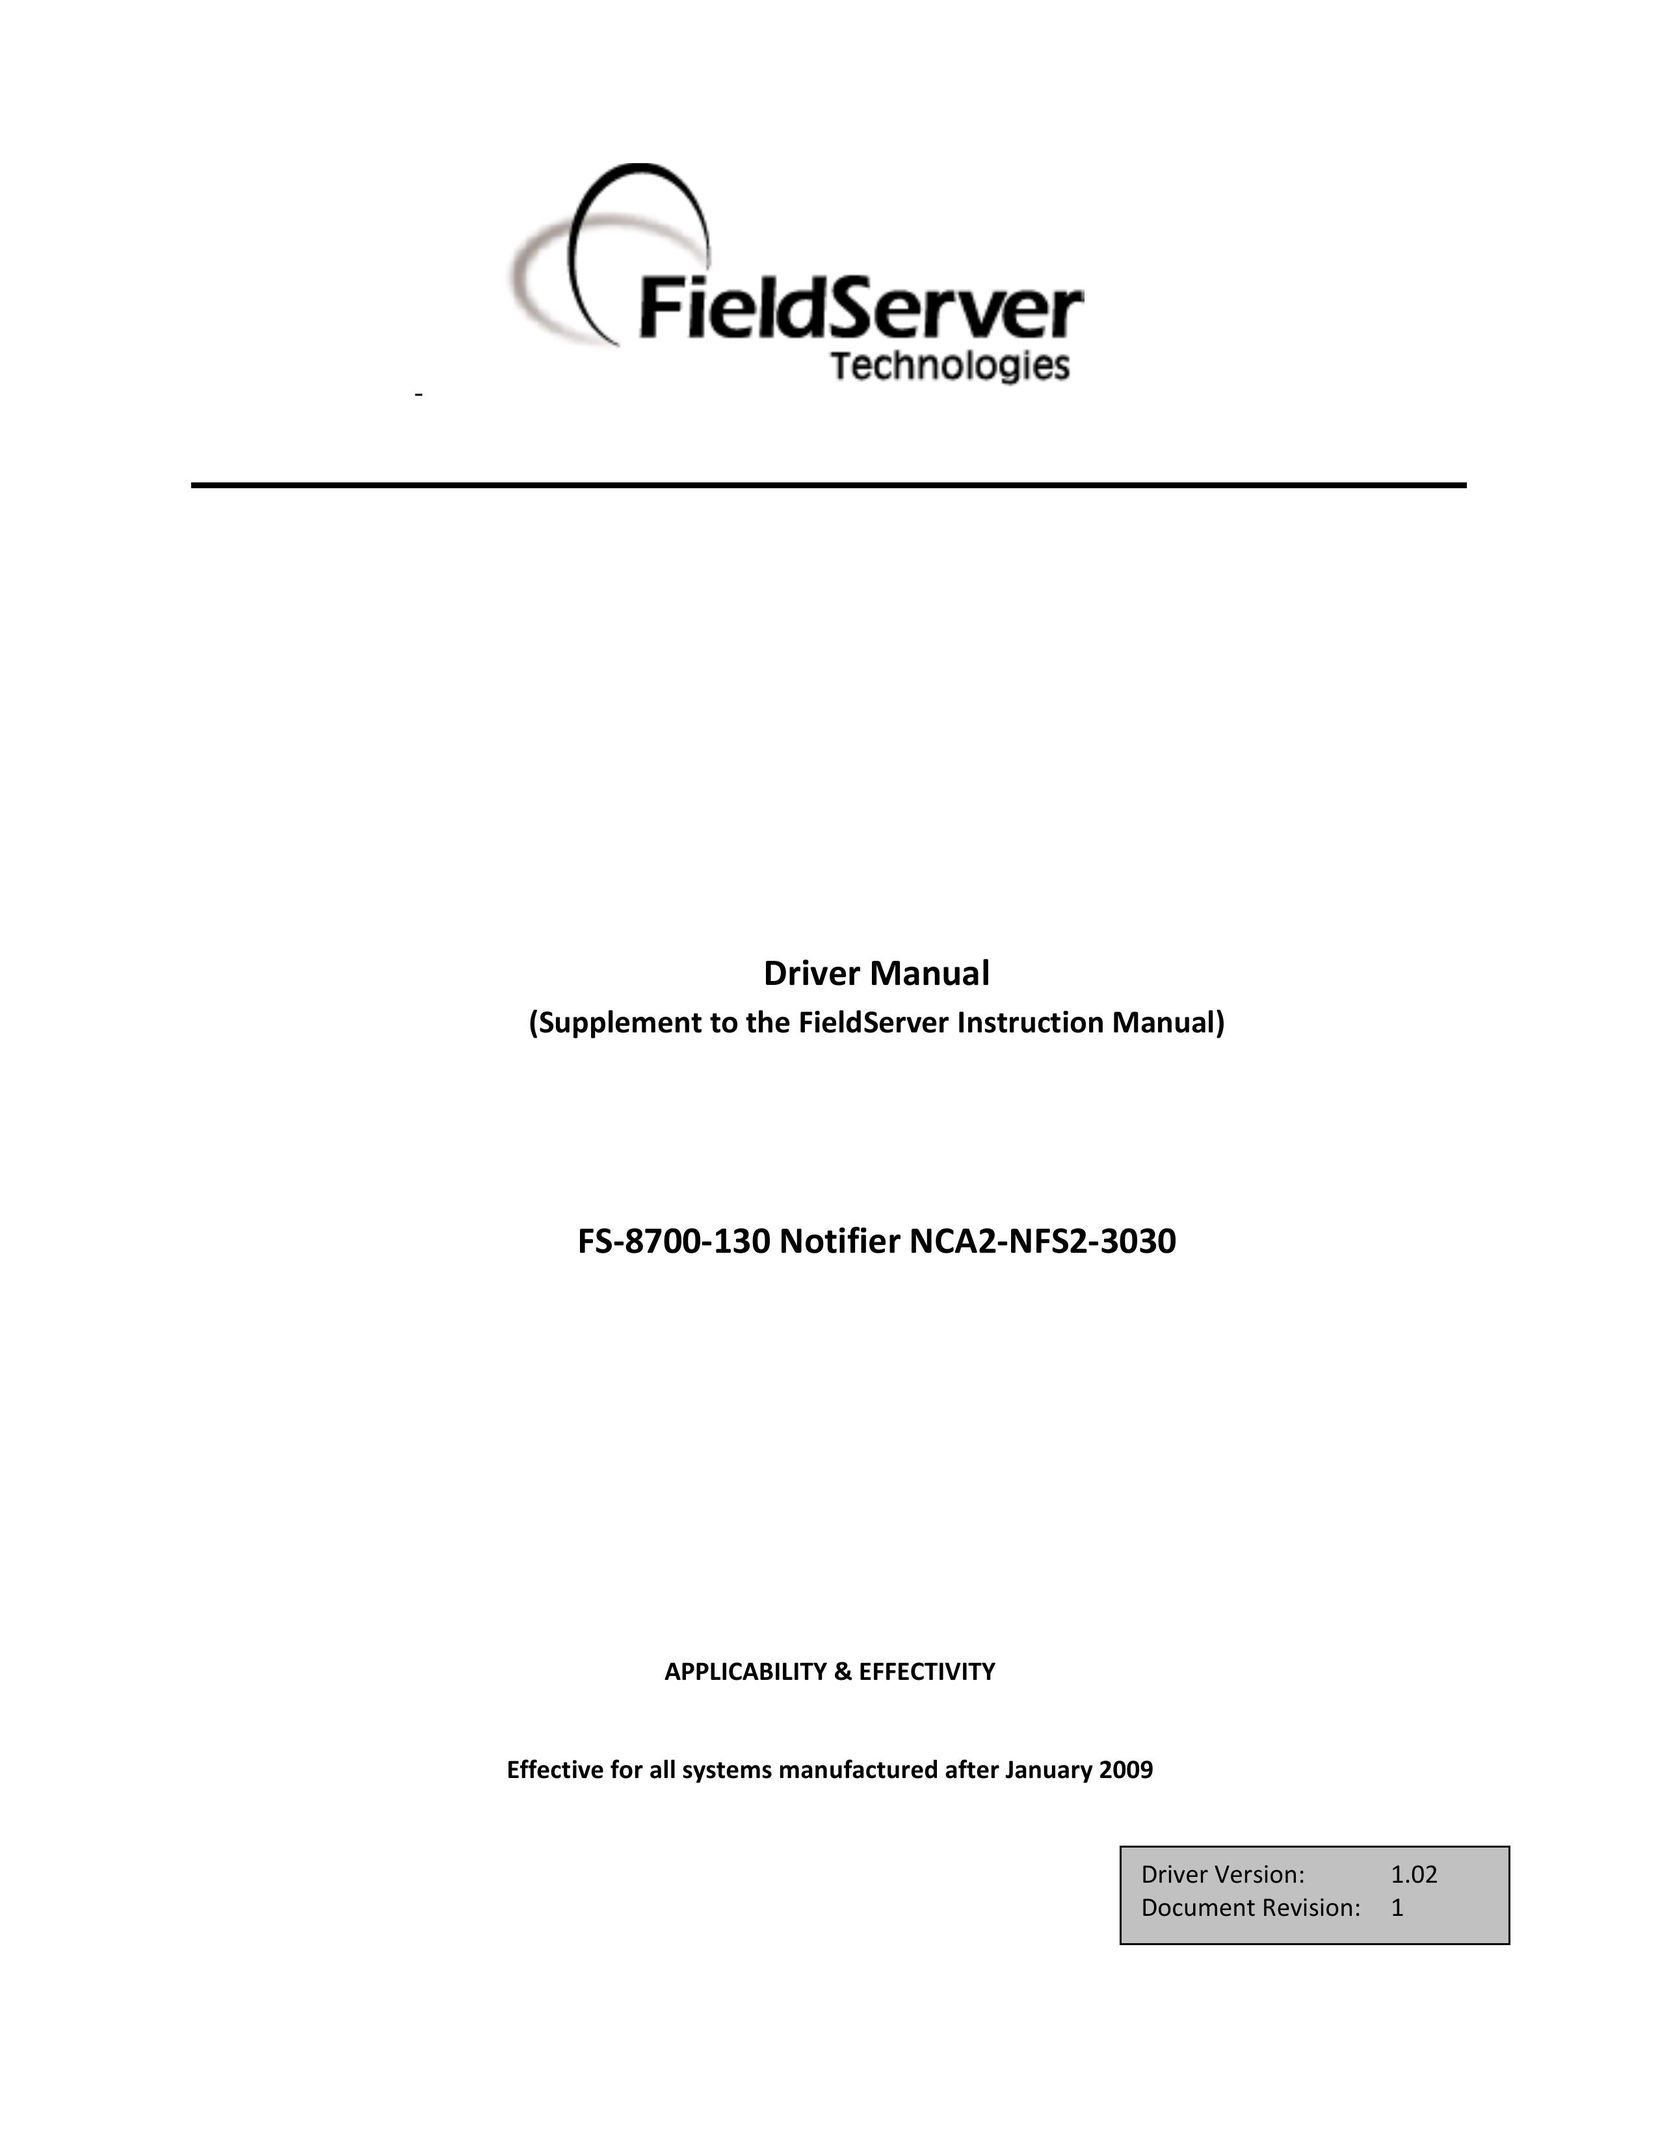 FieldServer FS-8700-130 Computer Drive User Manual